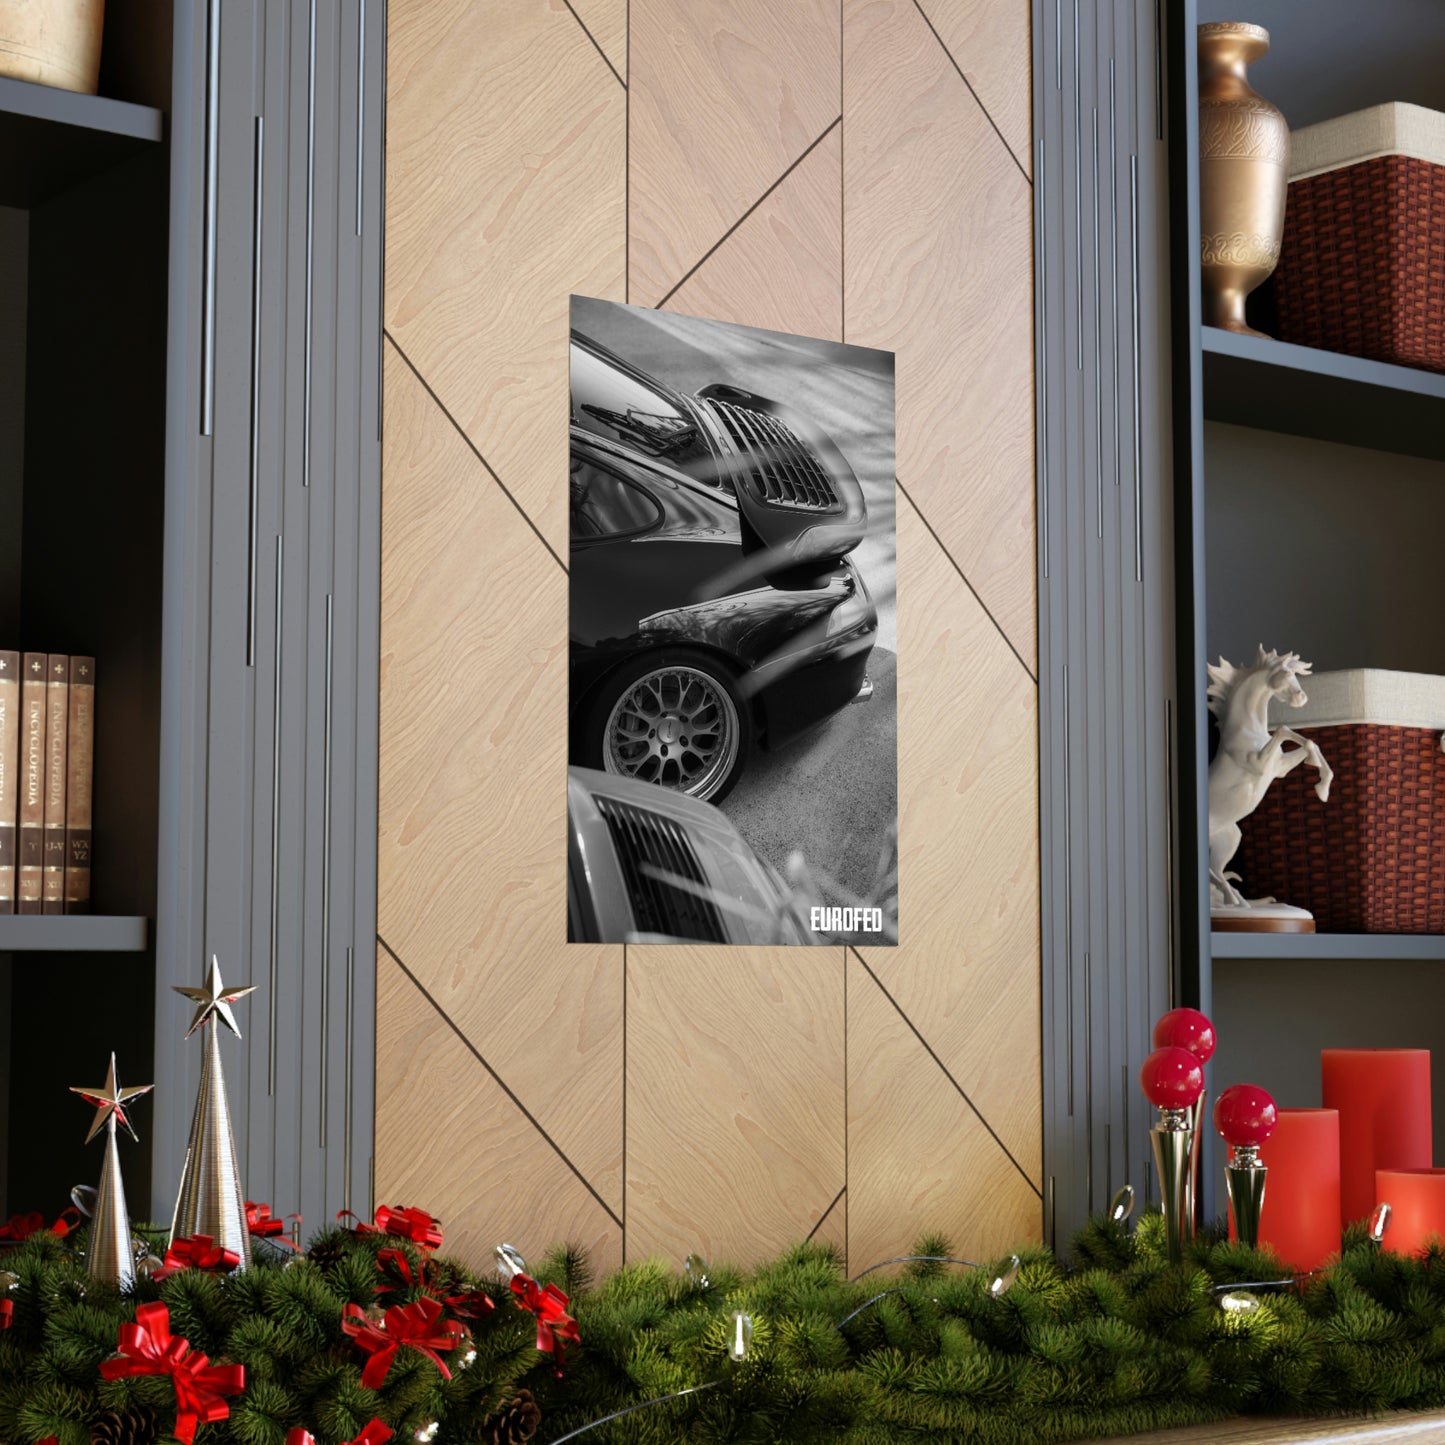 Premium Matte Vertical Poster B&W 993 Turbo | Eurofed Johns Creek